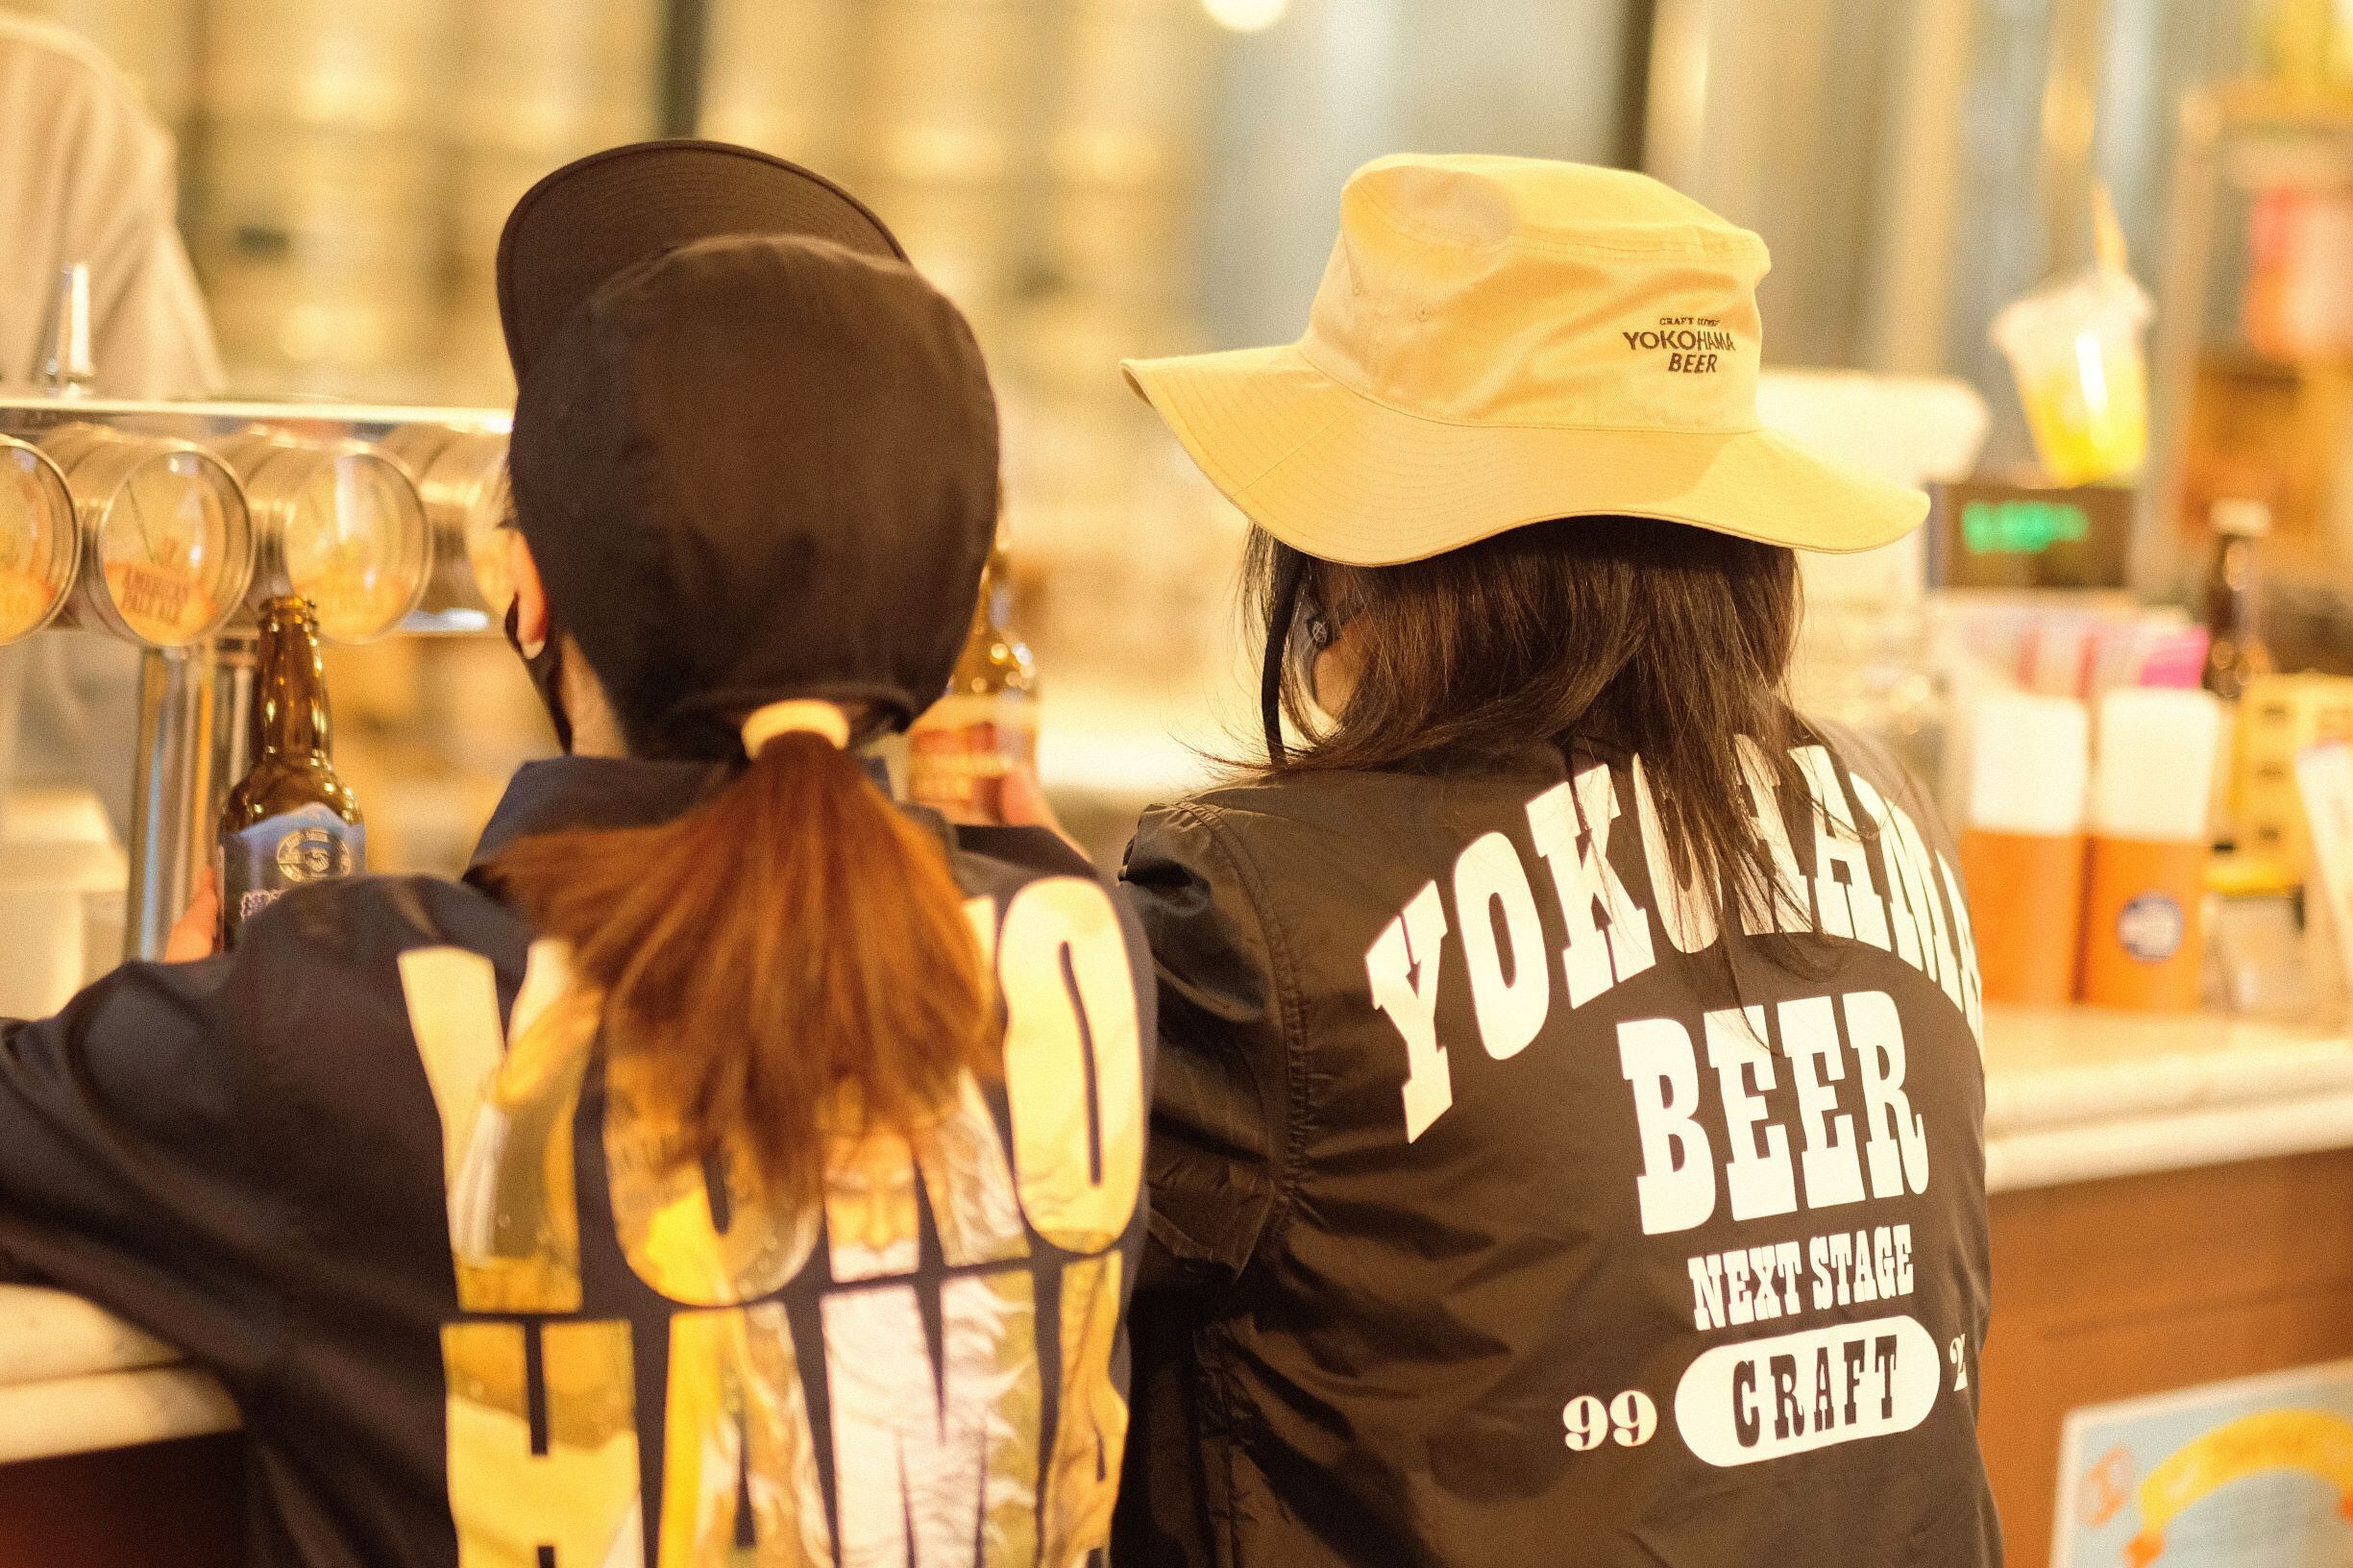 YOKOHAMA BEERオリジナルロゴ刺繍入り【Safari hat】